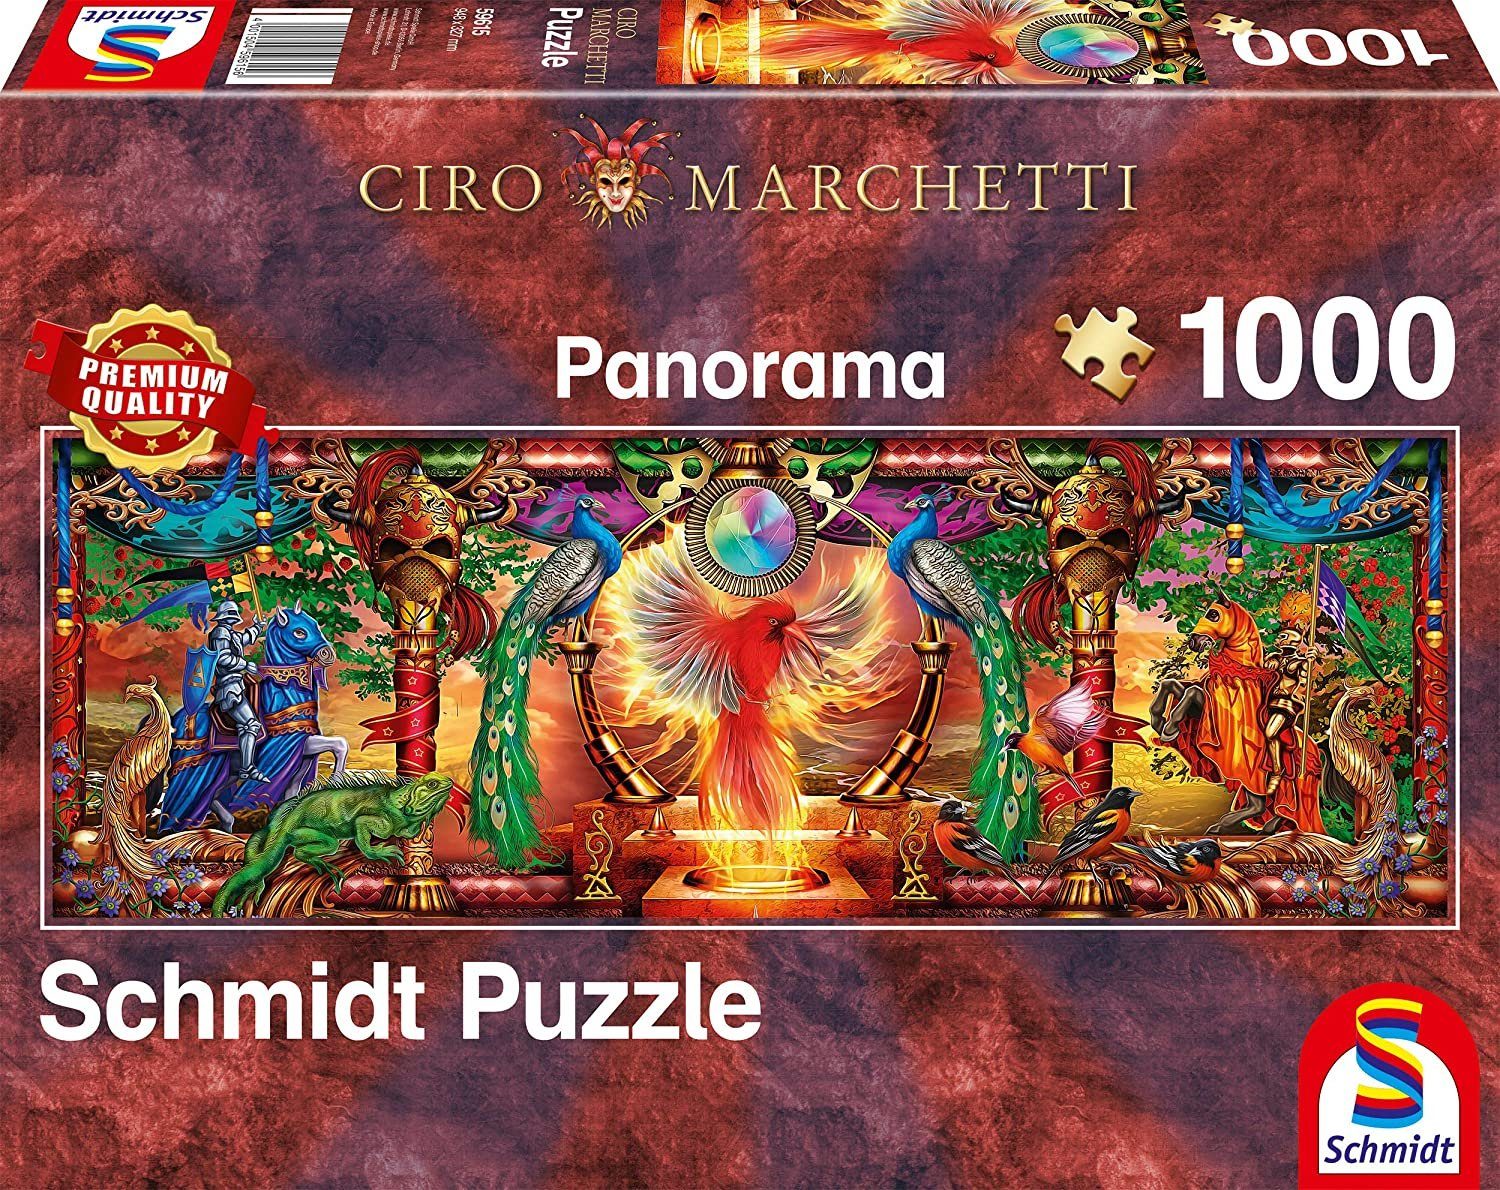 Schmidt Spiele Puzzle Im Ciro Reich Premium 1000 - Marchetti 1000 Panorama-Puzzle, Feuervogels, - Teile Quality Schmidt 59615 des Puzzleteile 